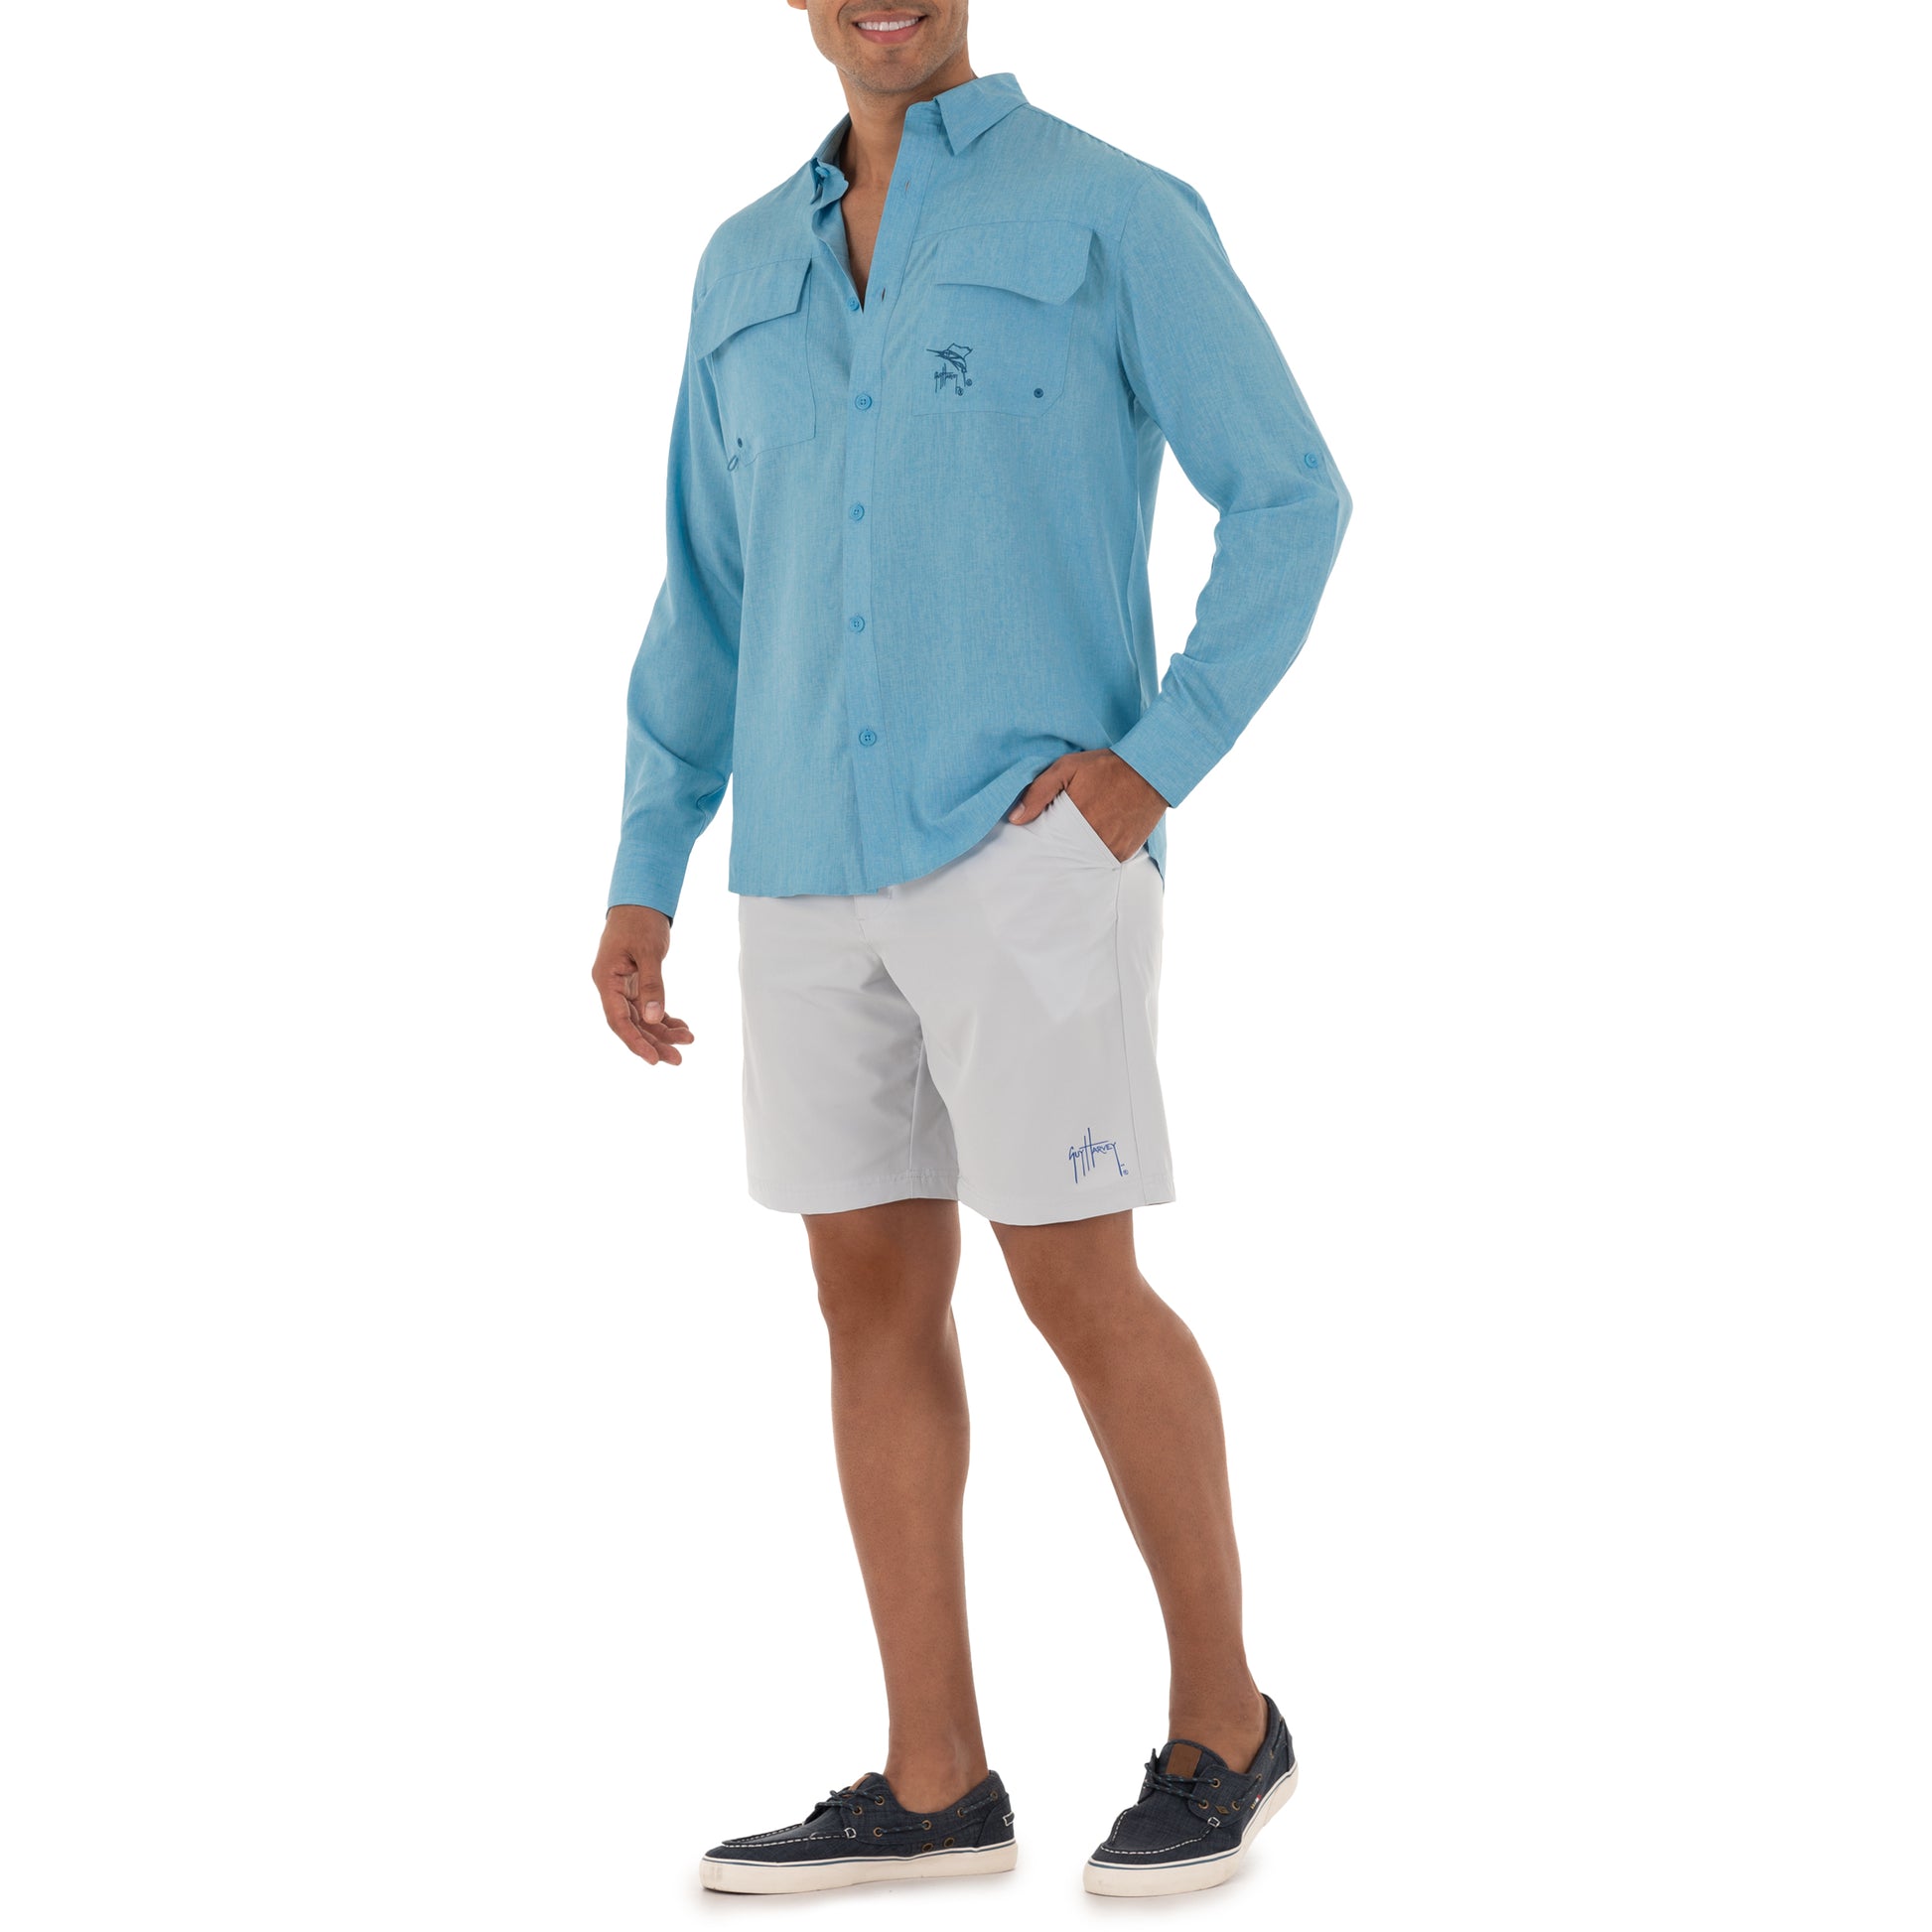 Guy Harvey | Men's Long Sleeve Heather Textured Cationic Blue Fishing Shirt, Small